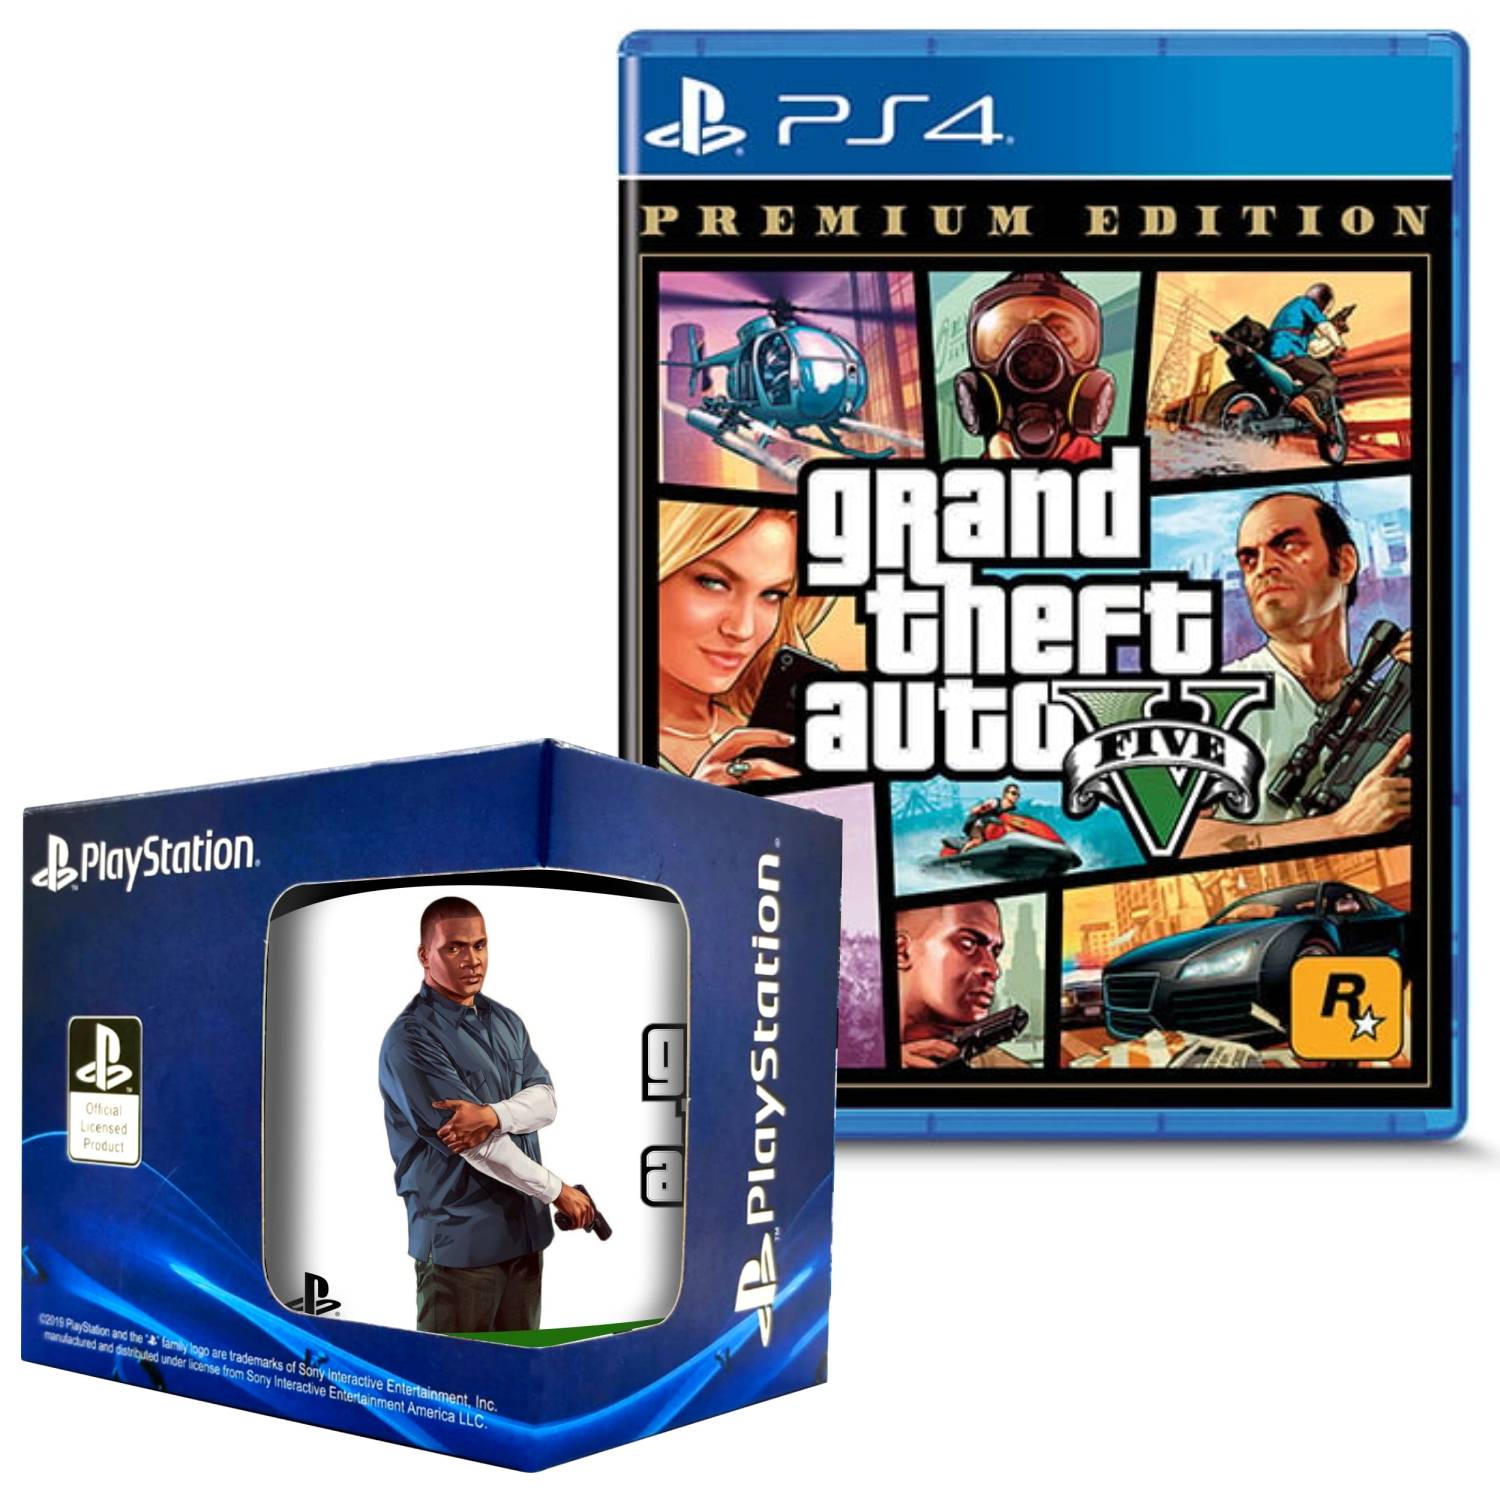 Grand theft auto V Premium Edition PlayStation 4 + taza